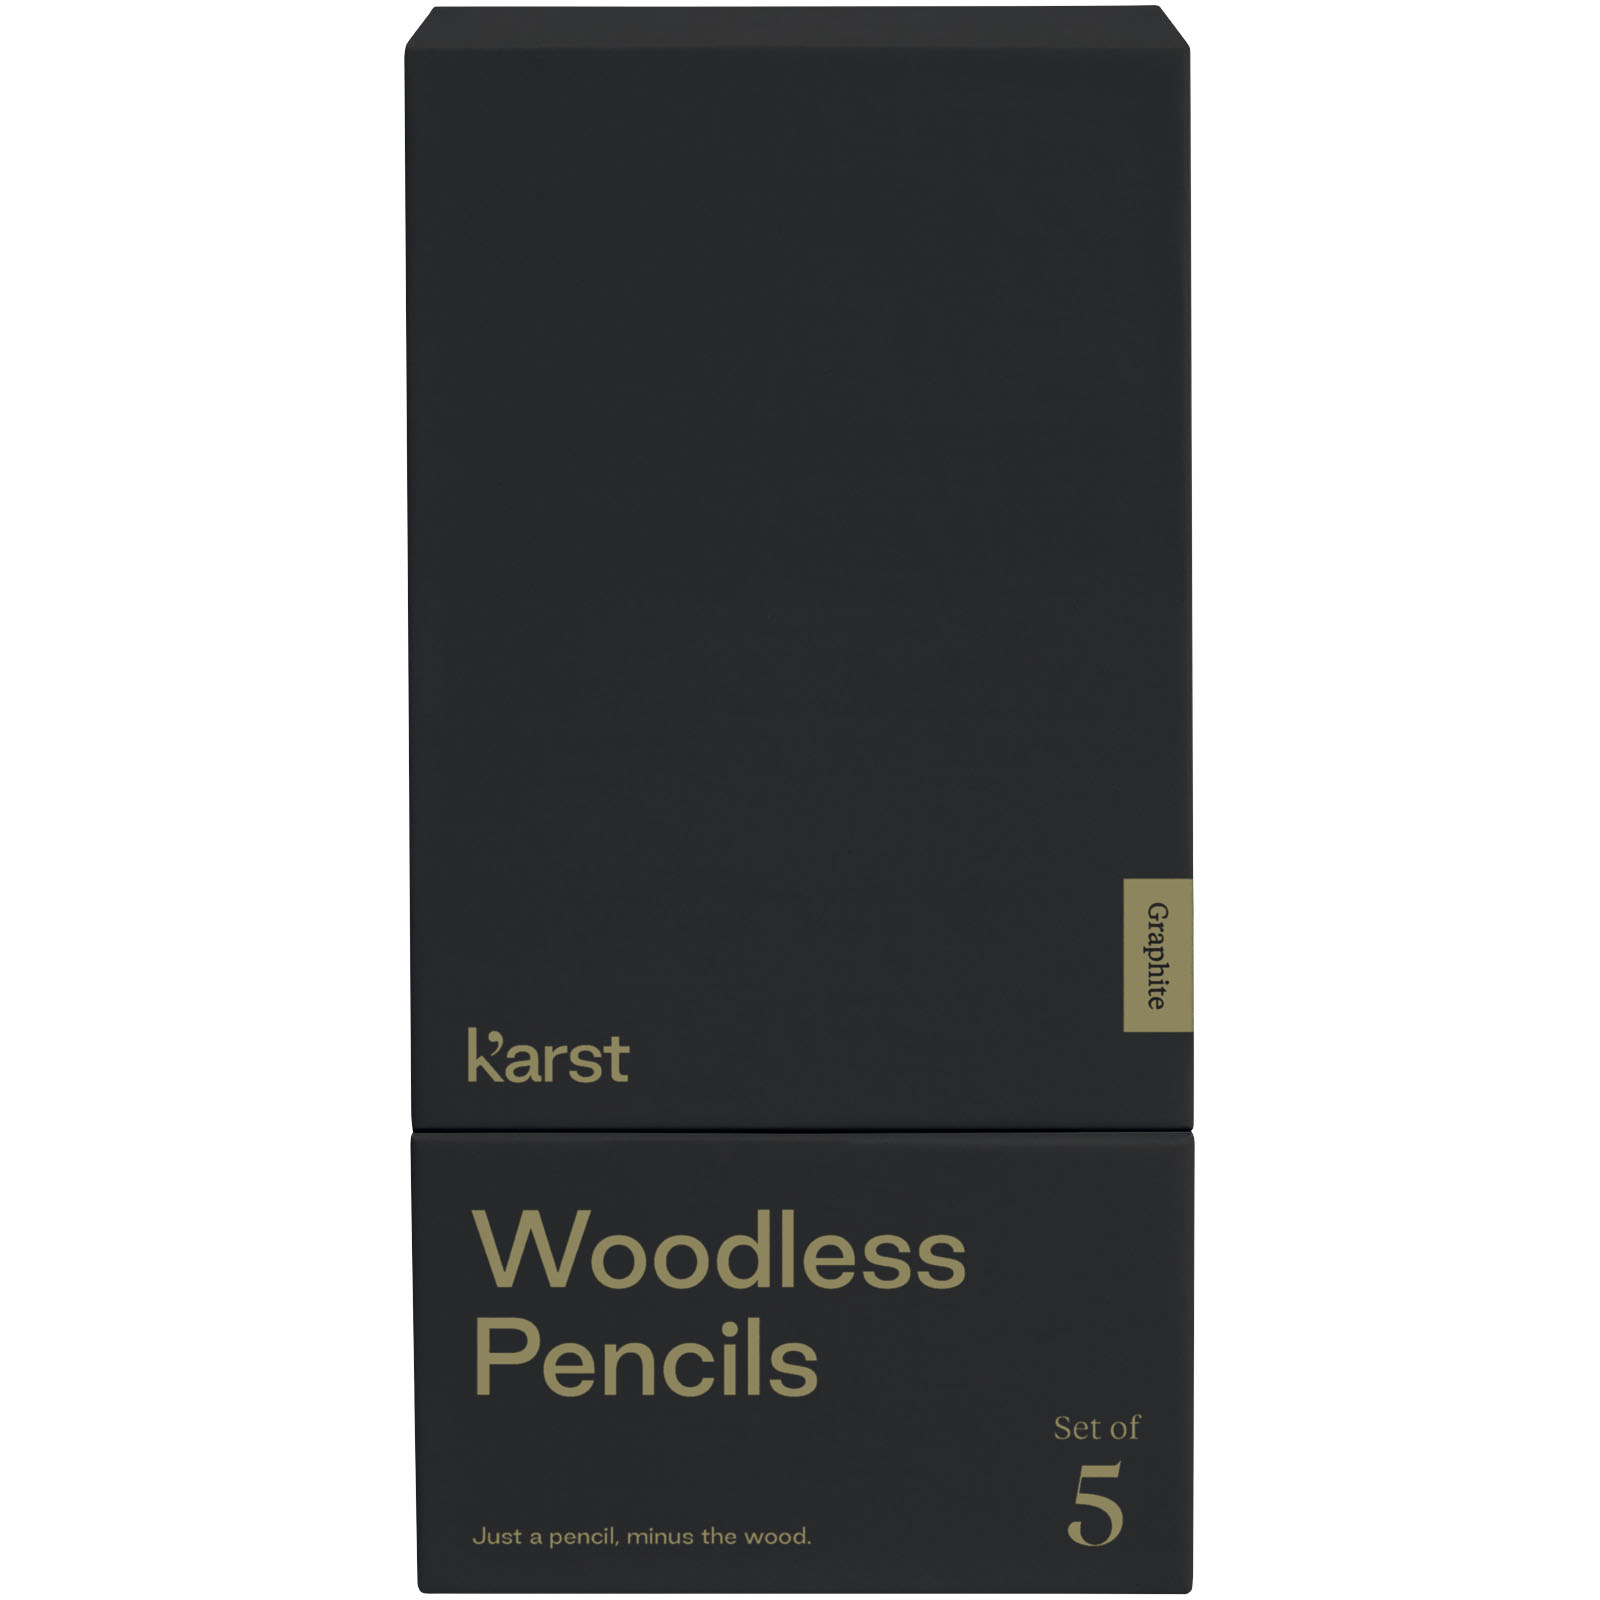 Advertising Pencils - Karst® 5-pack 2B woodless graphite pencils - 1